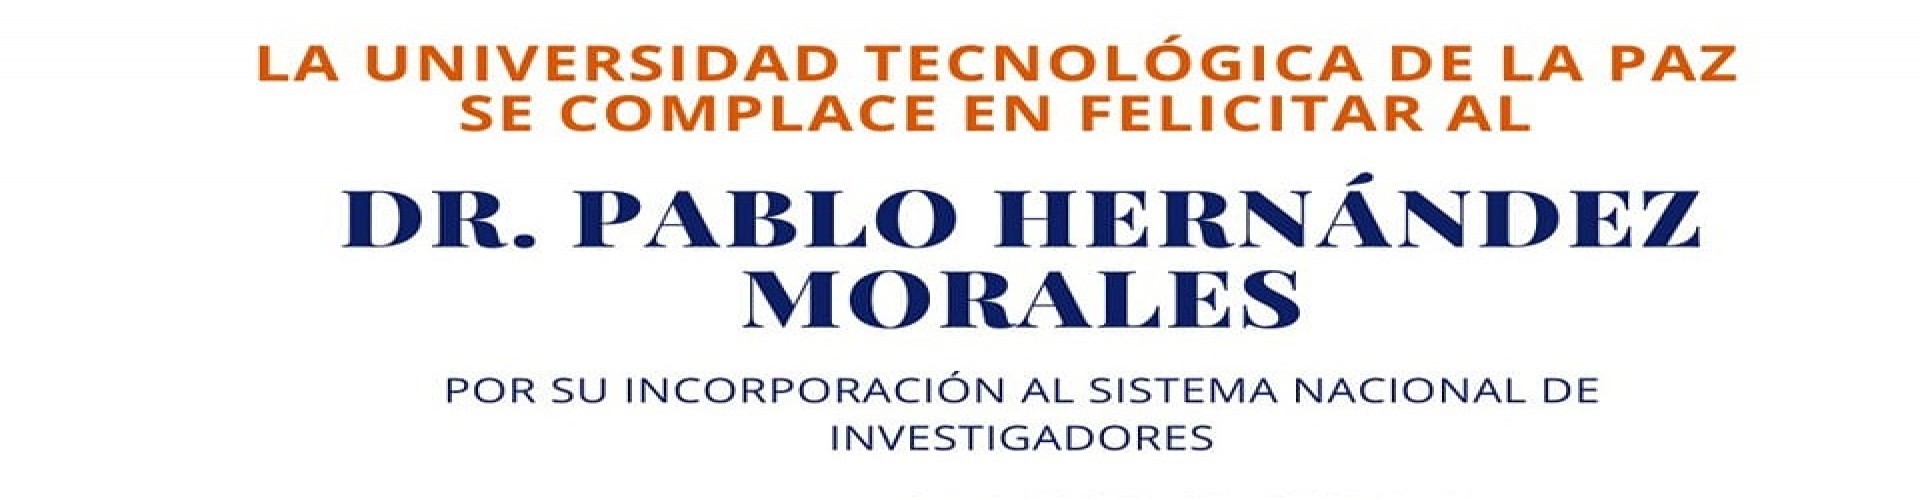 Felicitación a Dr. Pablo Hernández por SNI